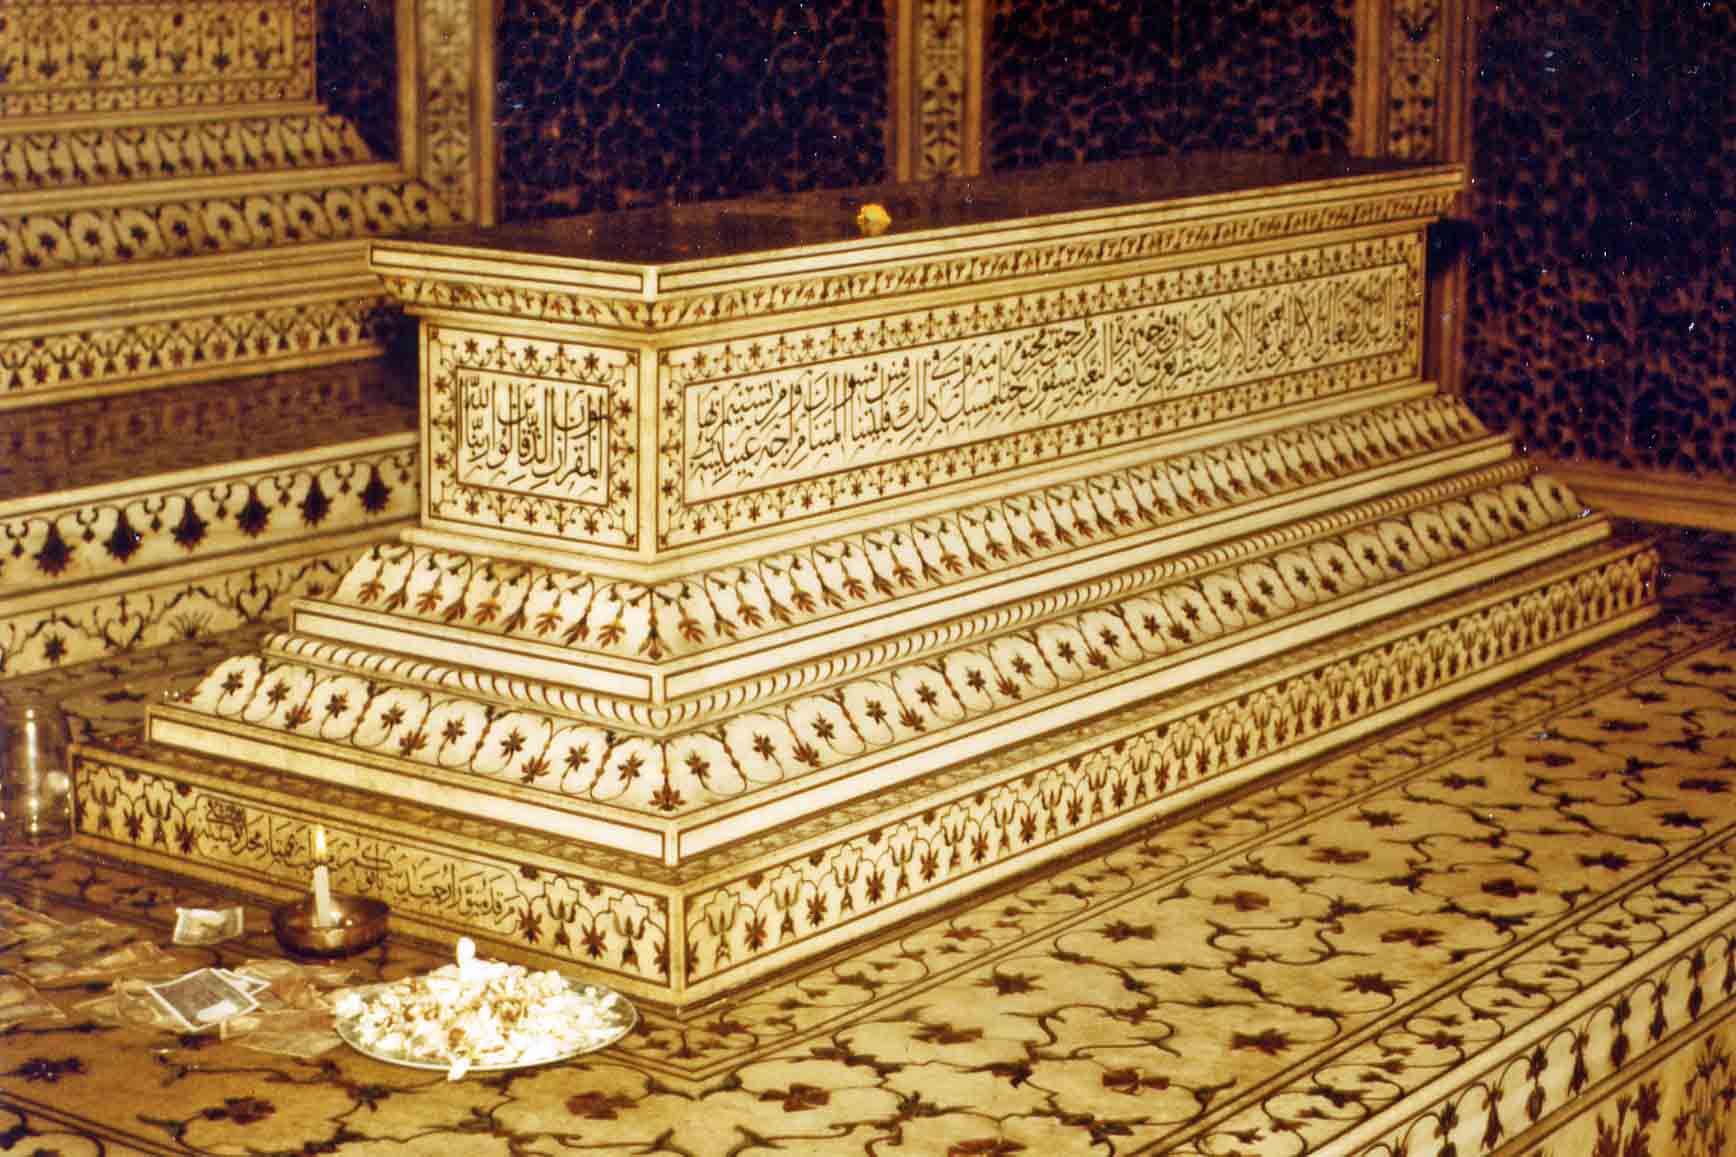 Coffin in the Taj Mahal